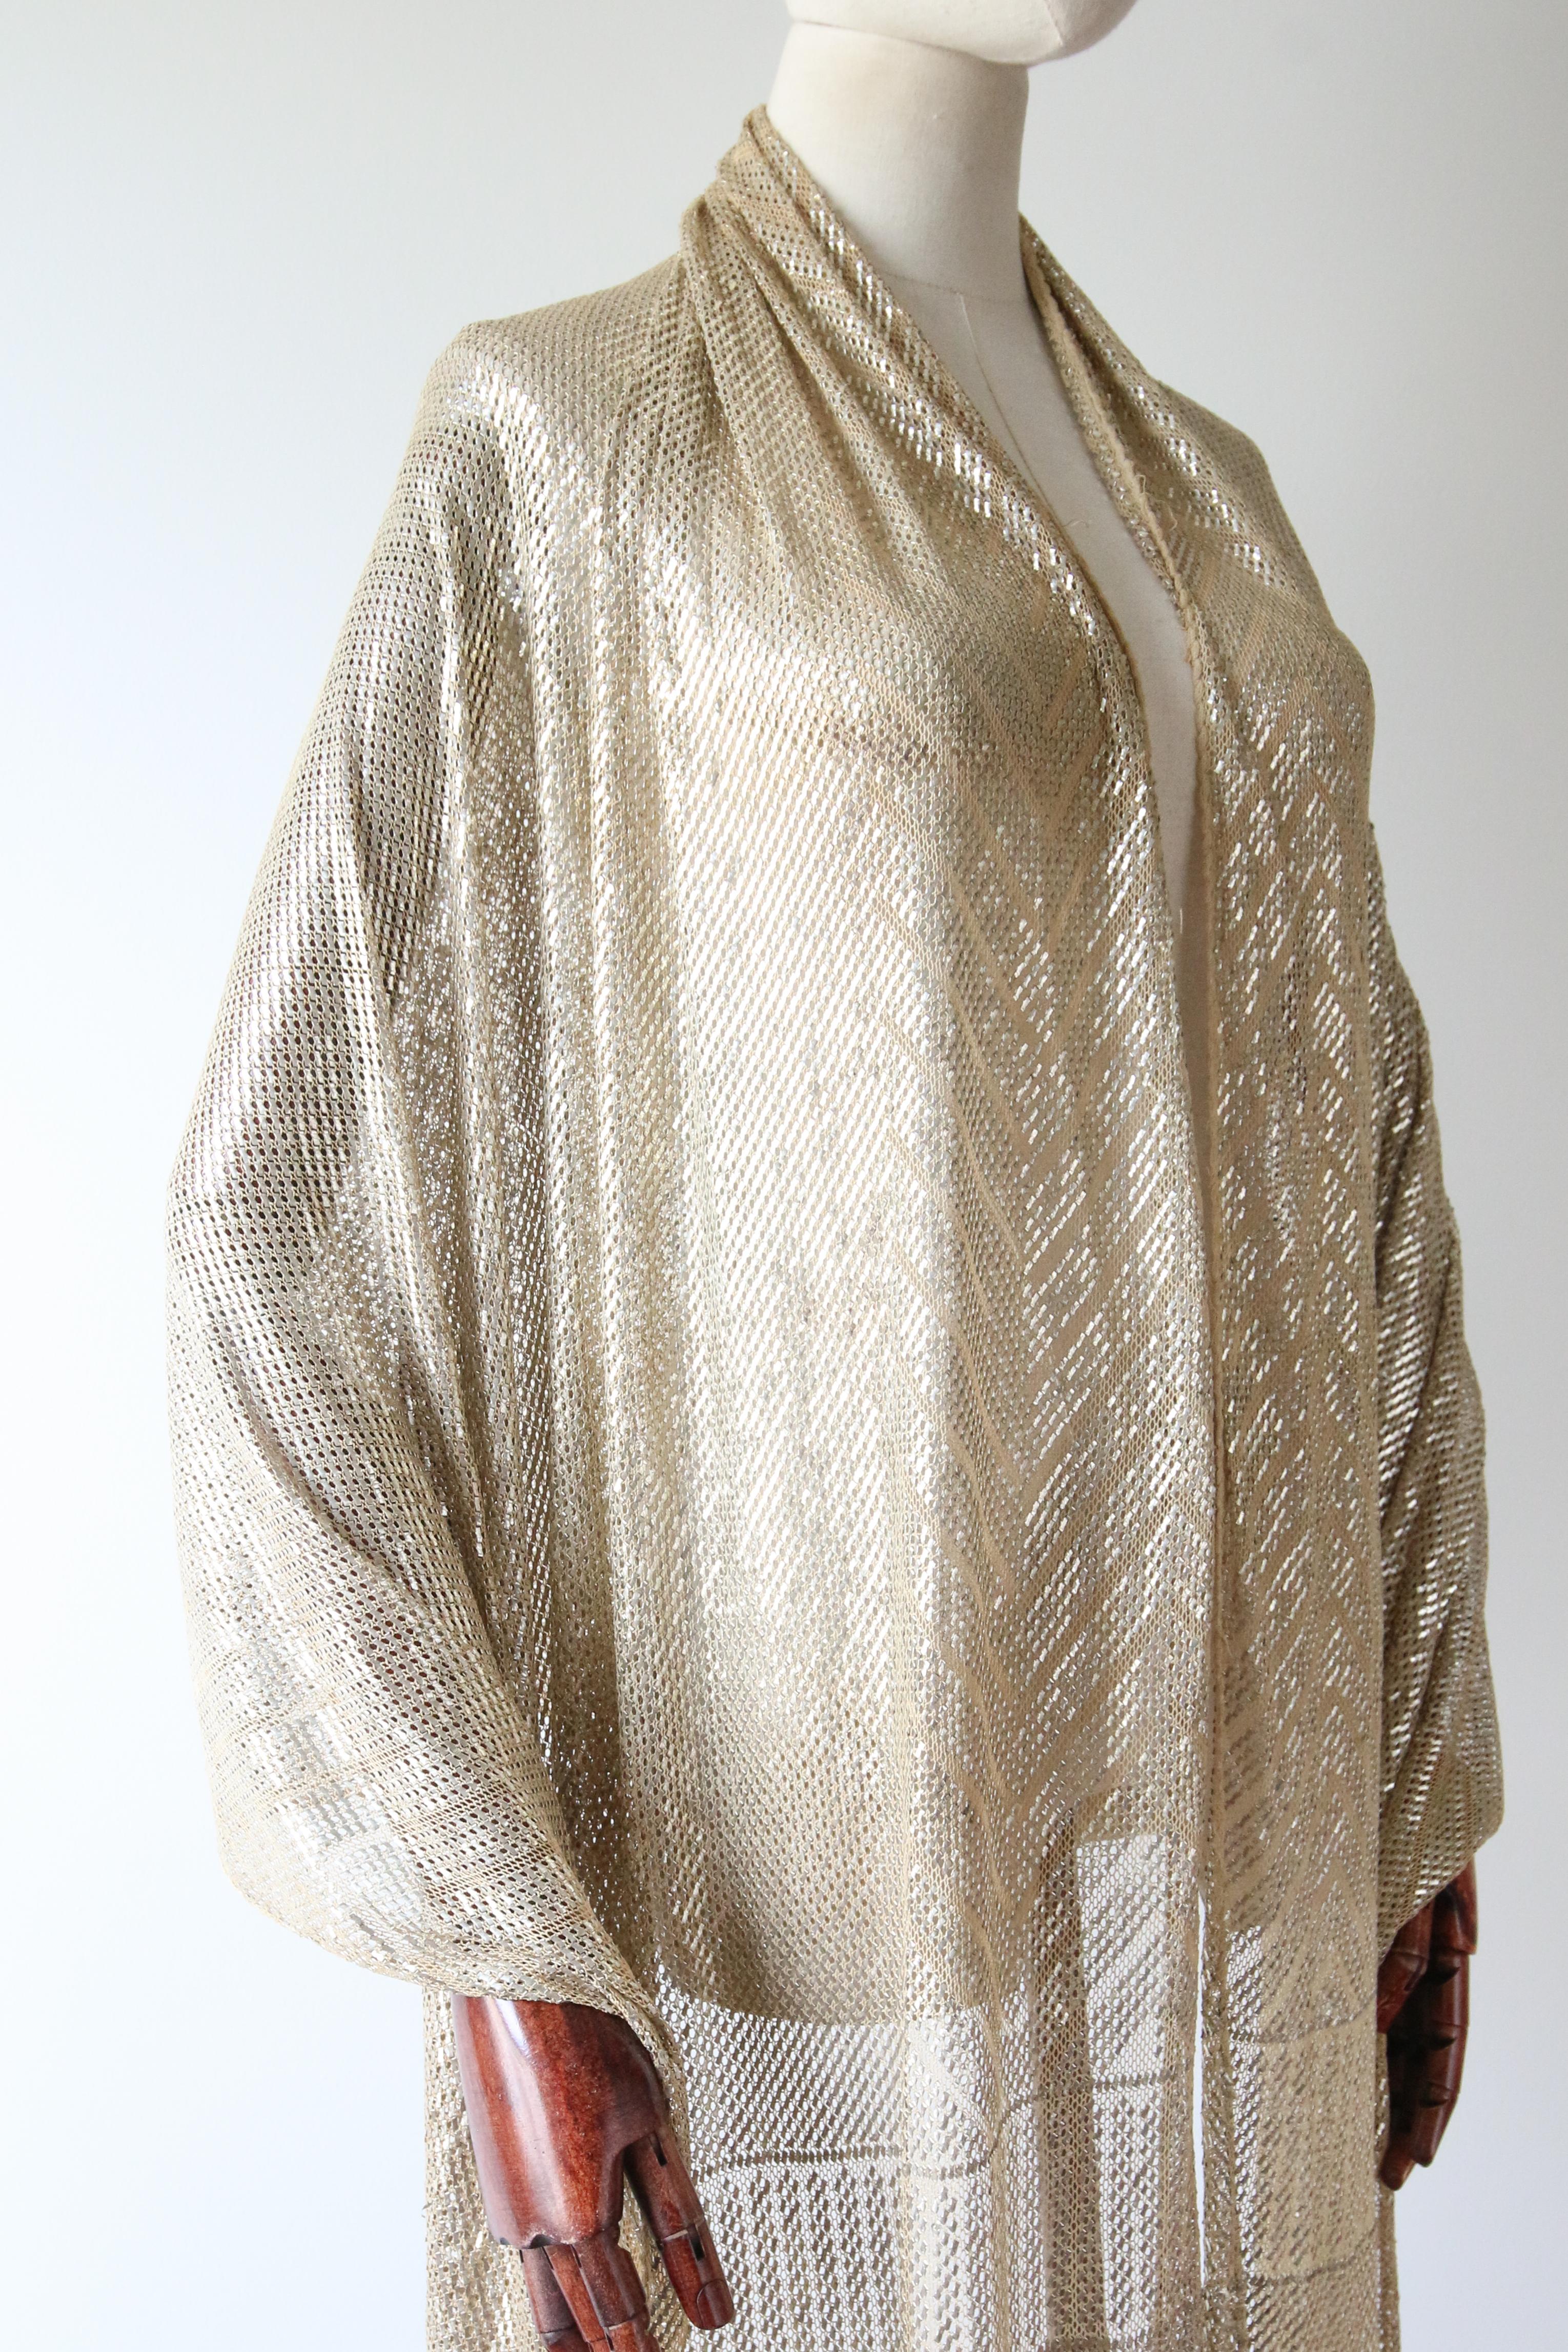 Vintage 1920's cream assuit shawl vintage 1920's cream metal work shawl  For Sale 2